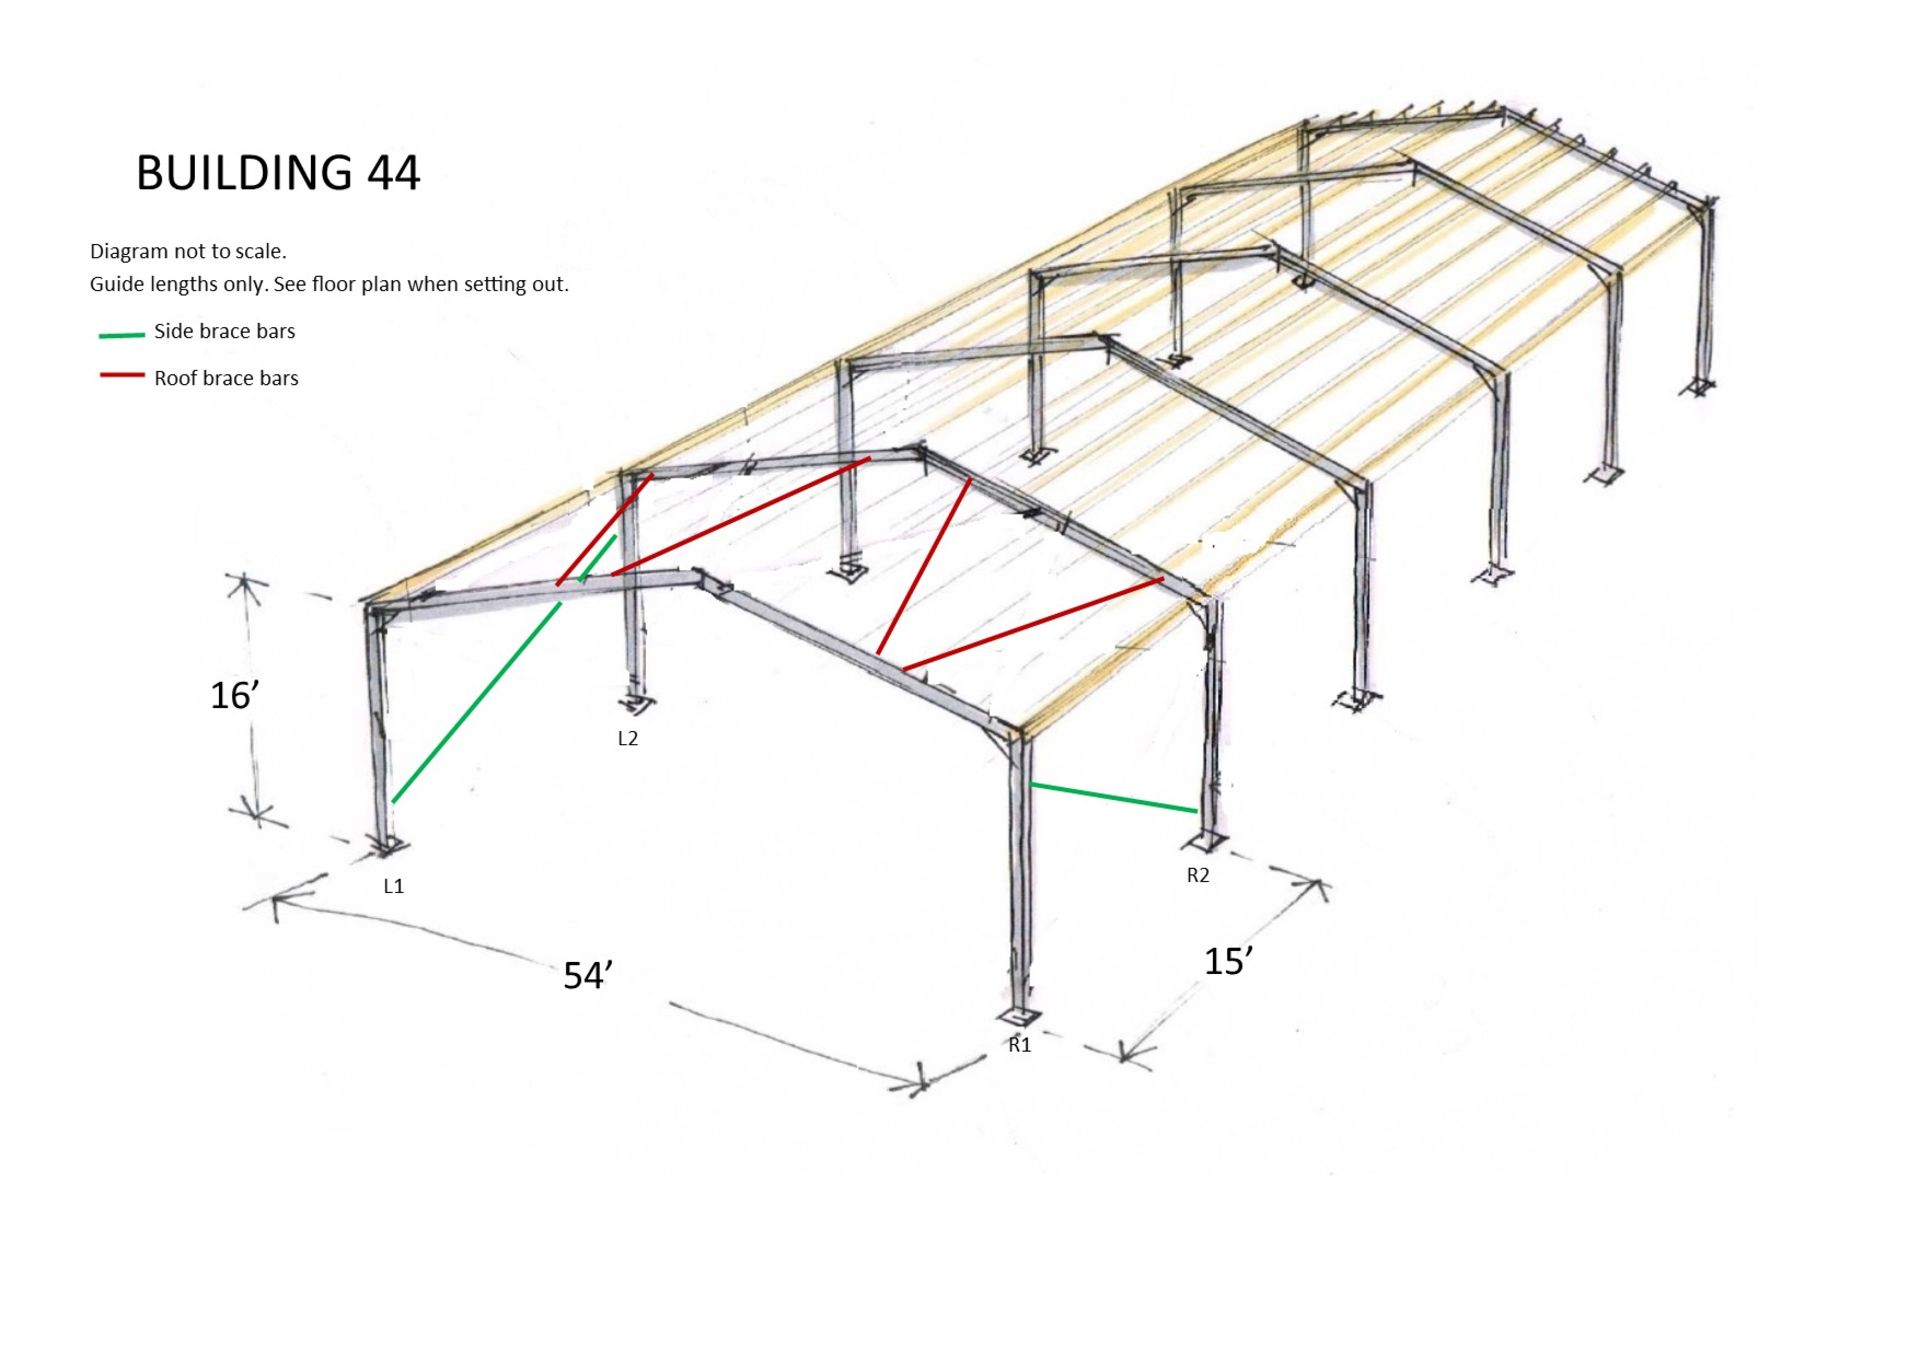 Steel framed building 75ft long x 54 ft wide x 16 ft @ eaves 12 .5 deg roof pitch - Image 5 of 6